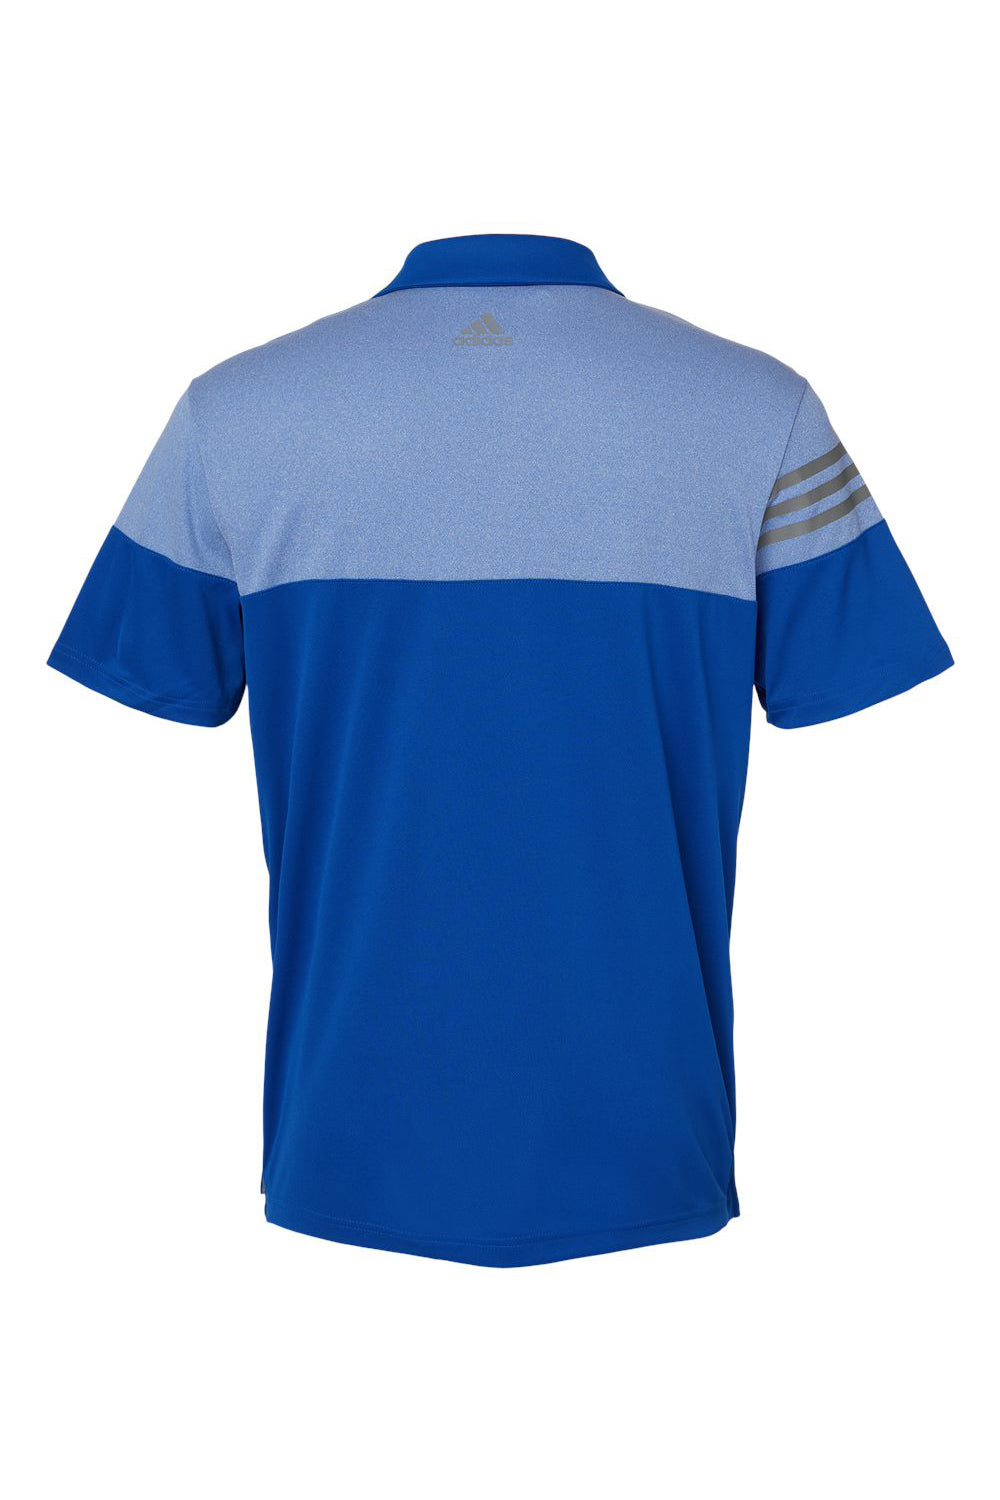 Adidas A213 Mens 3 Stripes Colorblock Moisture Wicking Short Sleeve Polo Shirt Collegiate Royal Blue Flat Back